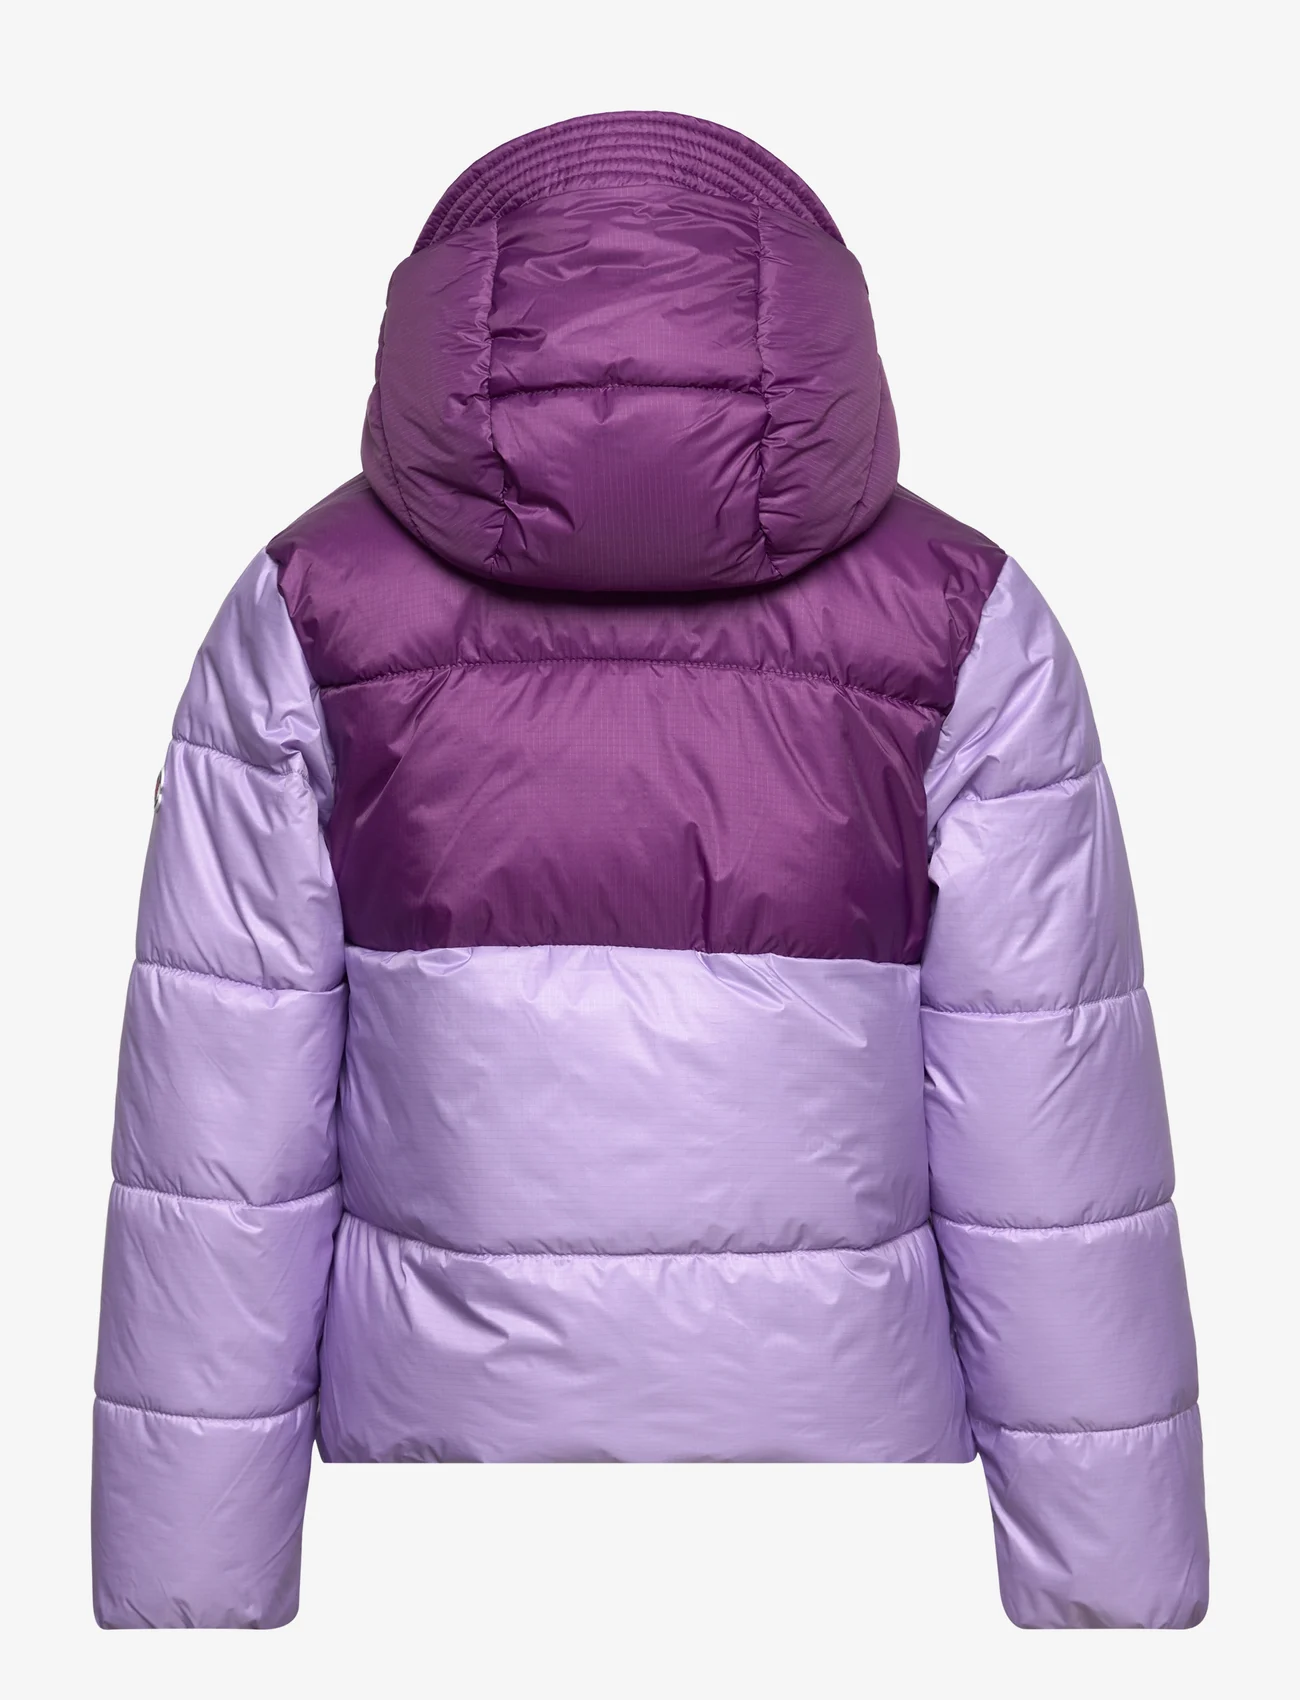 Champion - Hooded Jacket - isolierte jacken - purple rose - 1